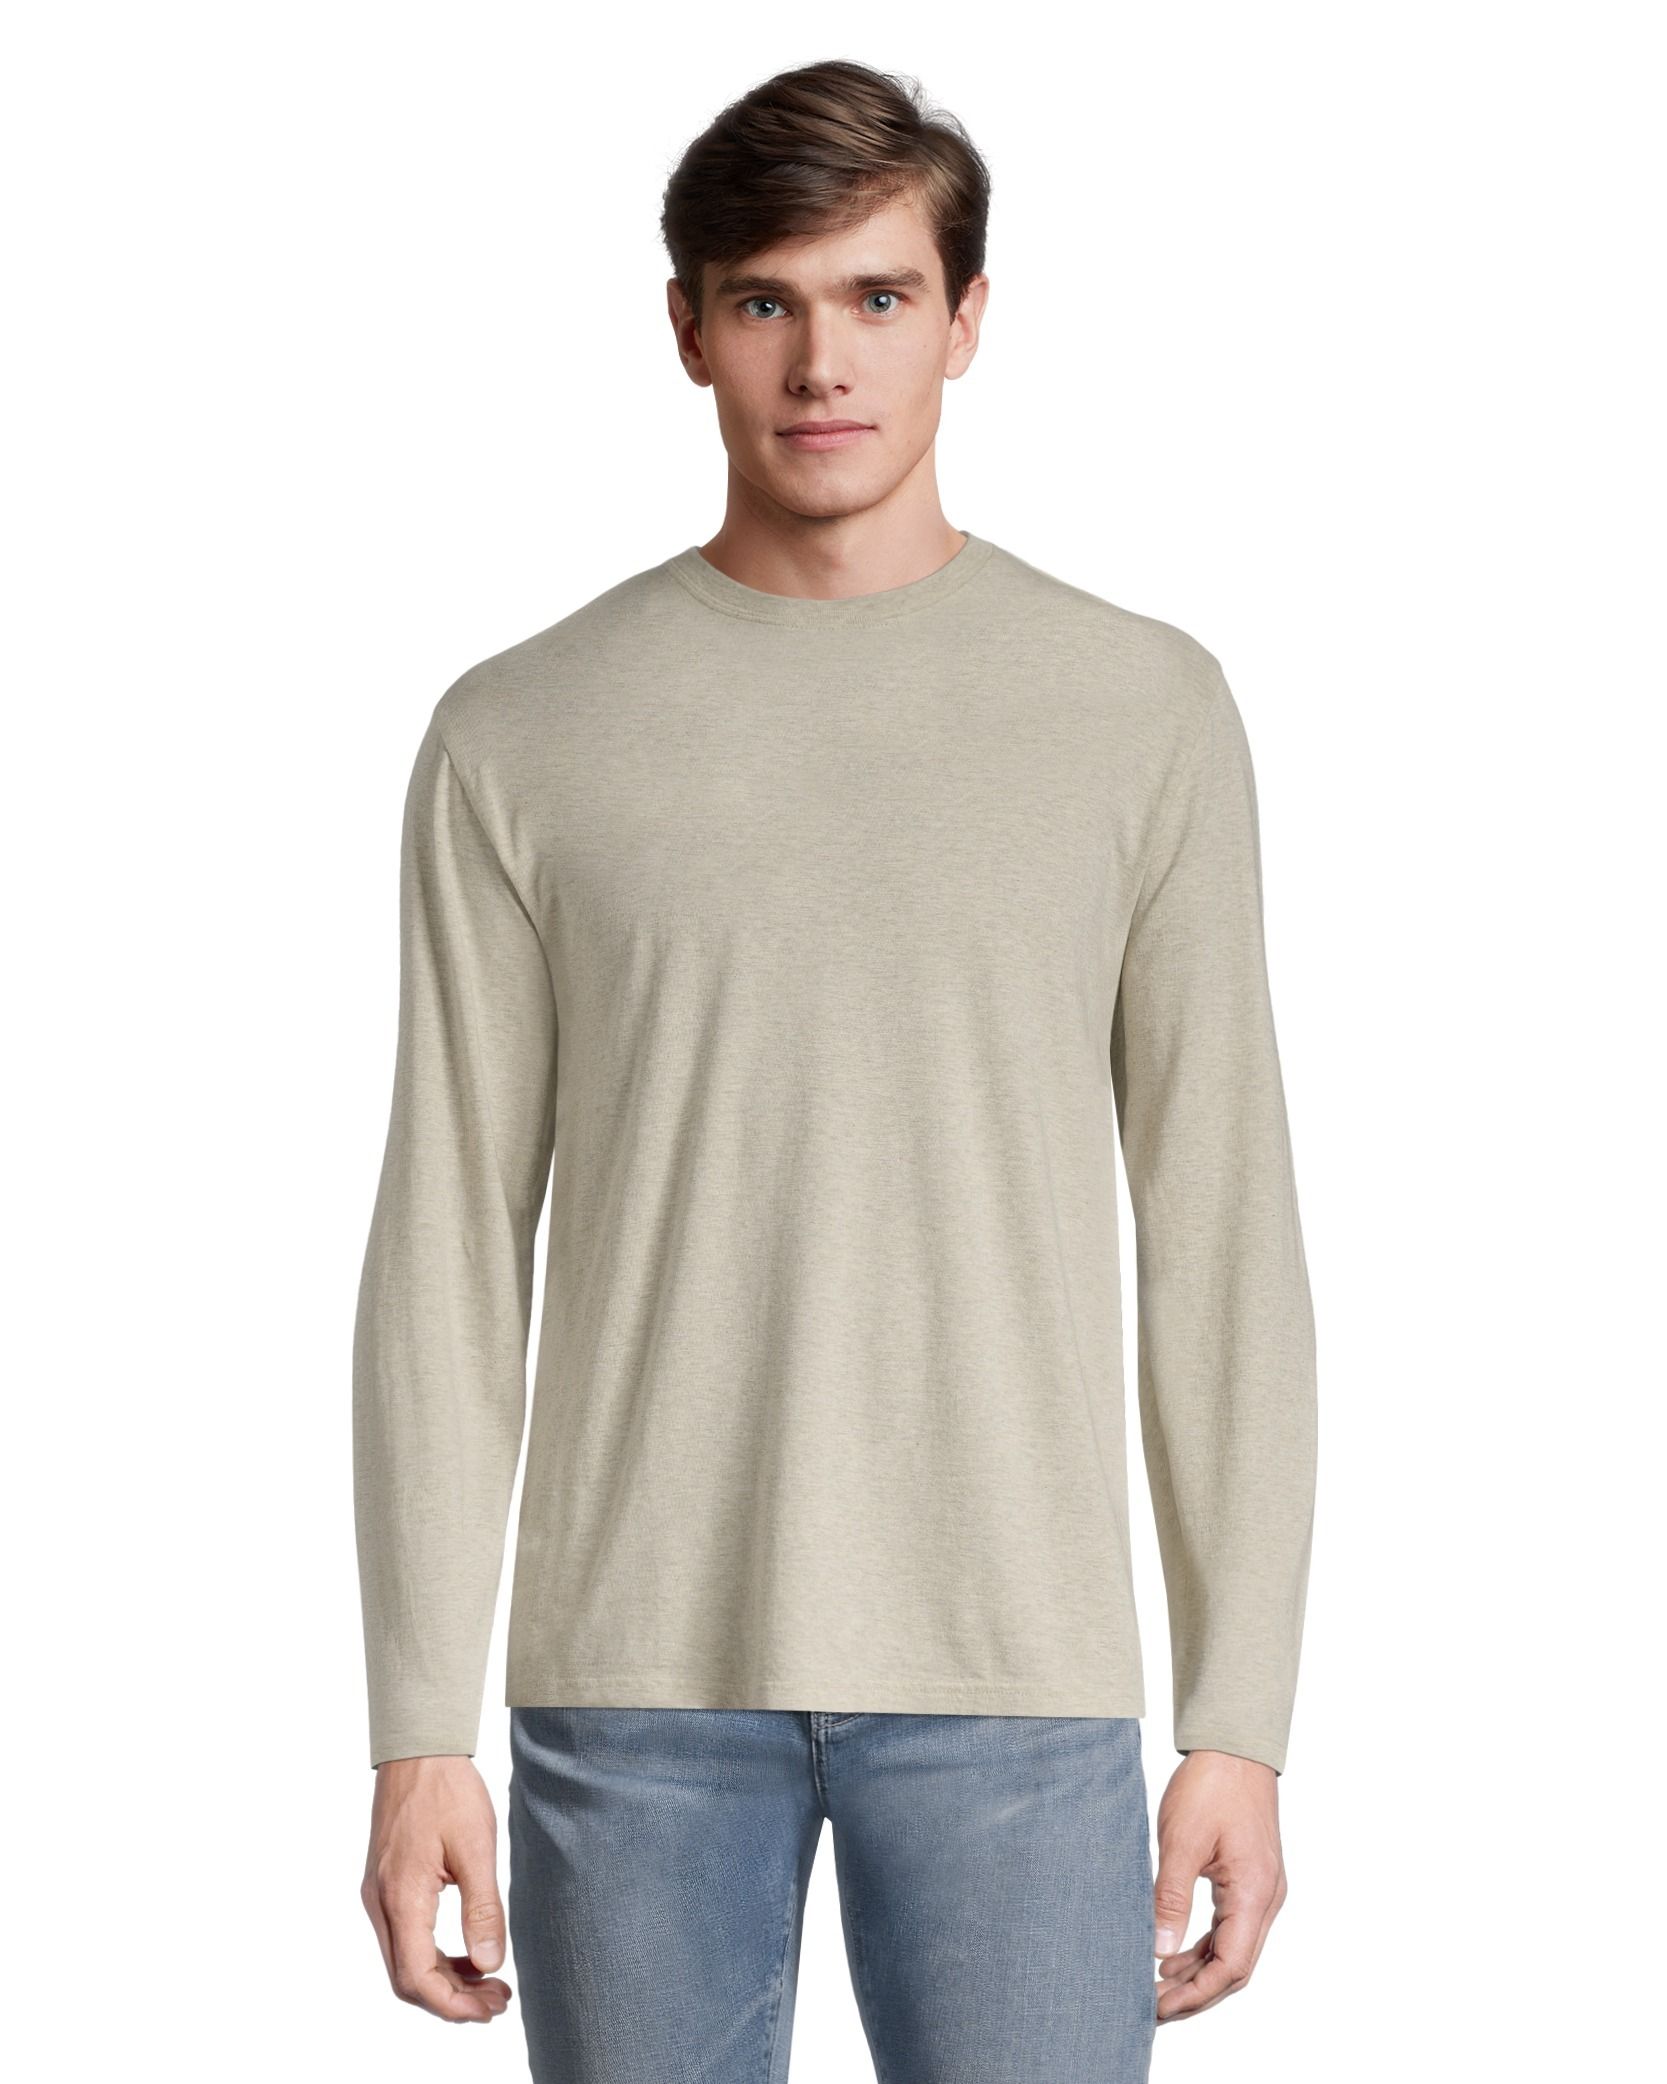 Hanes Women's Long Sleeve Crewneck T-Shirt 100% Cotton Tee Tagfree Size S  to 2XL 